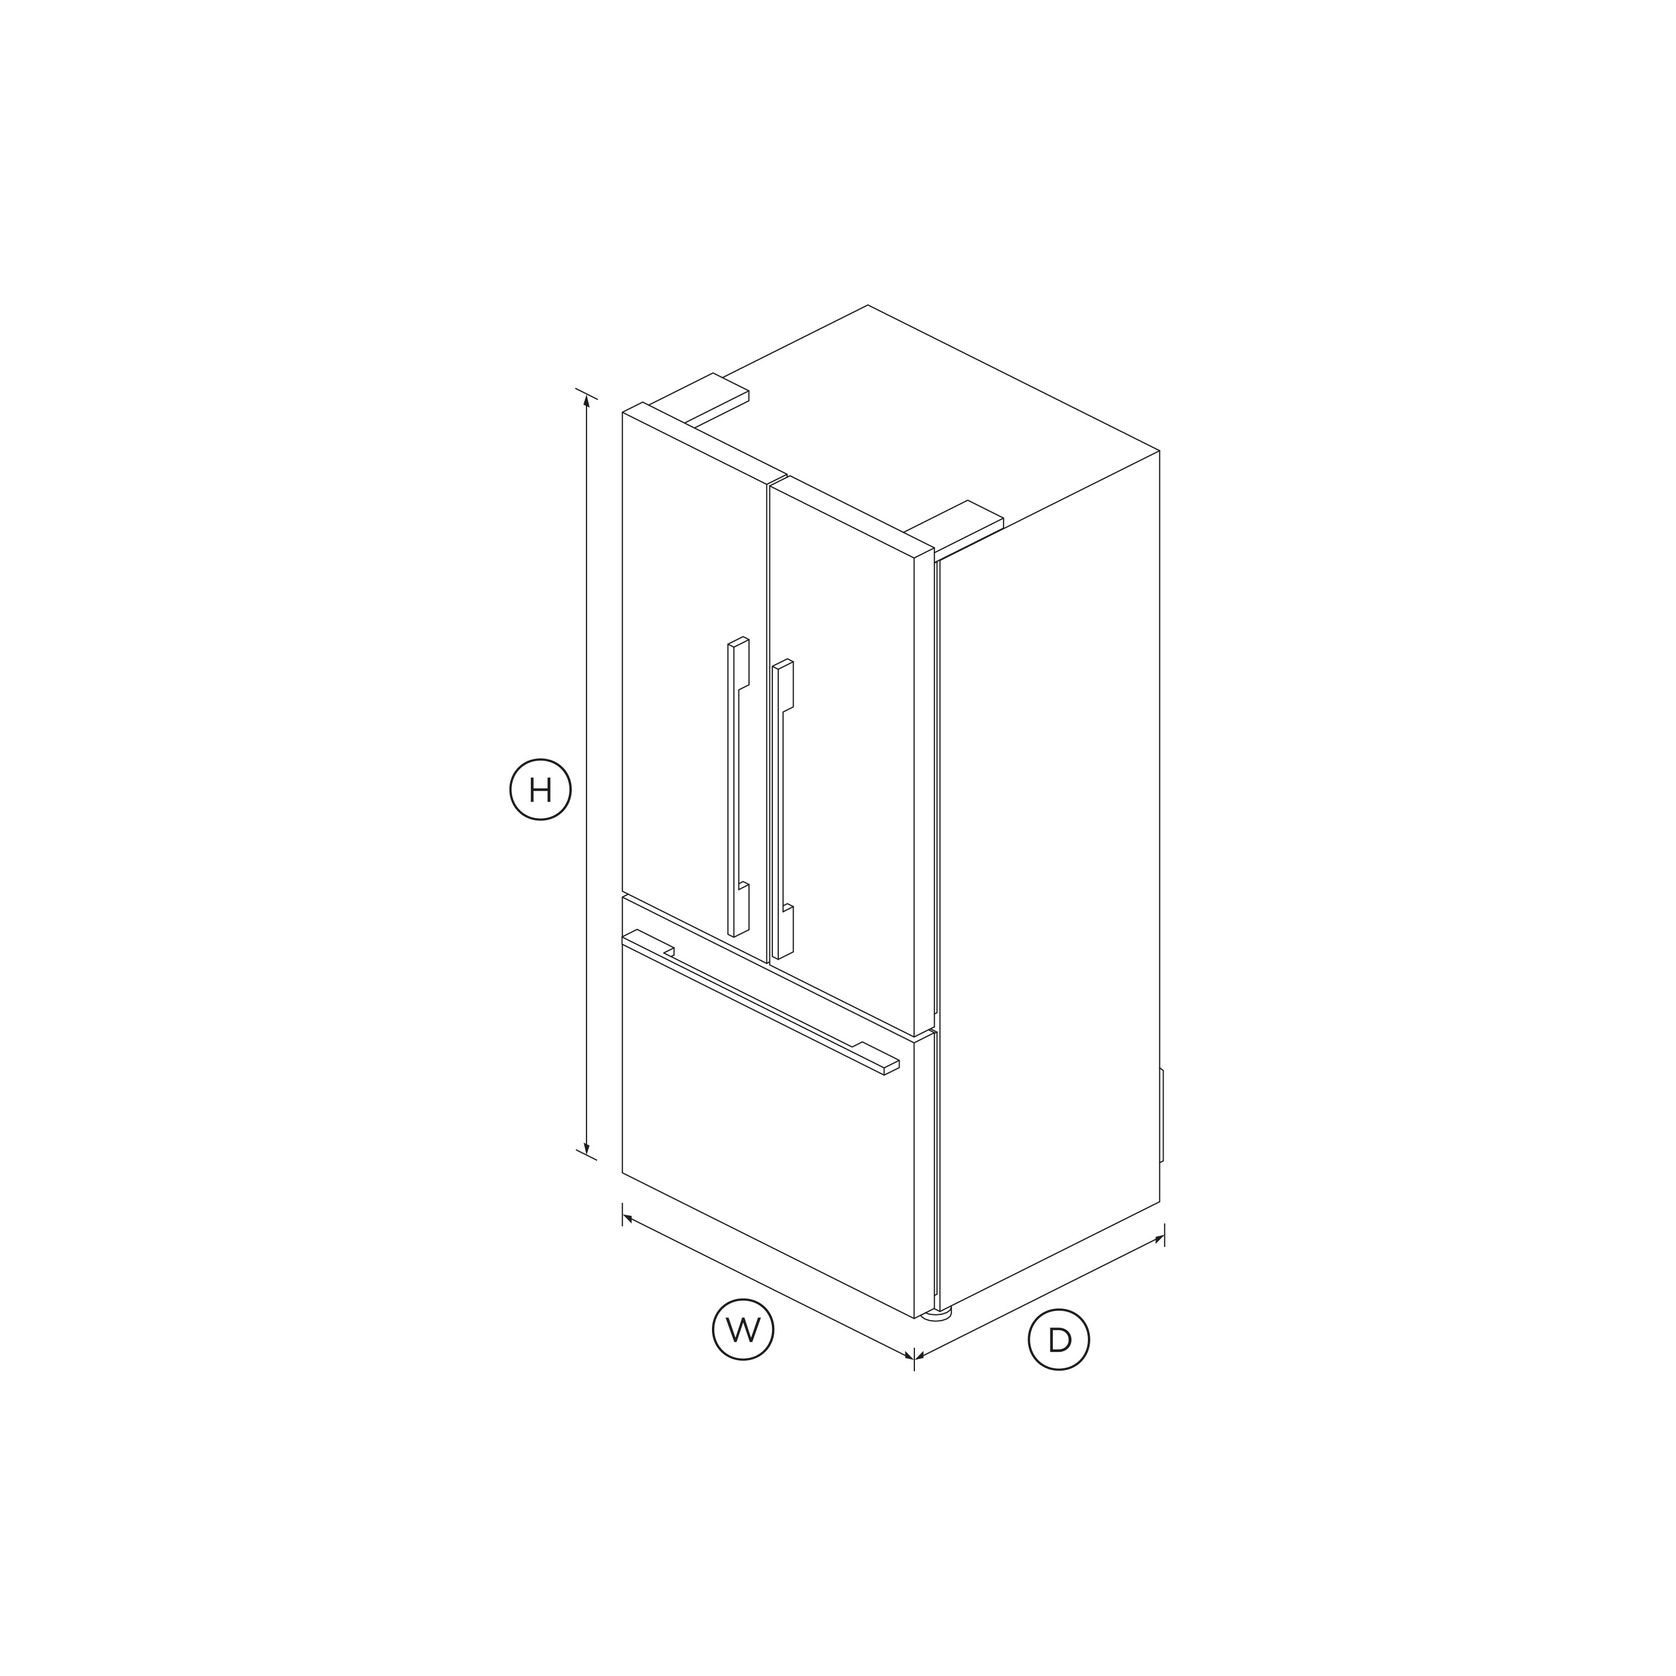 Freestanding French Door Refrigerator Freezer, 79cm, 487L gallery detail image